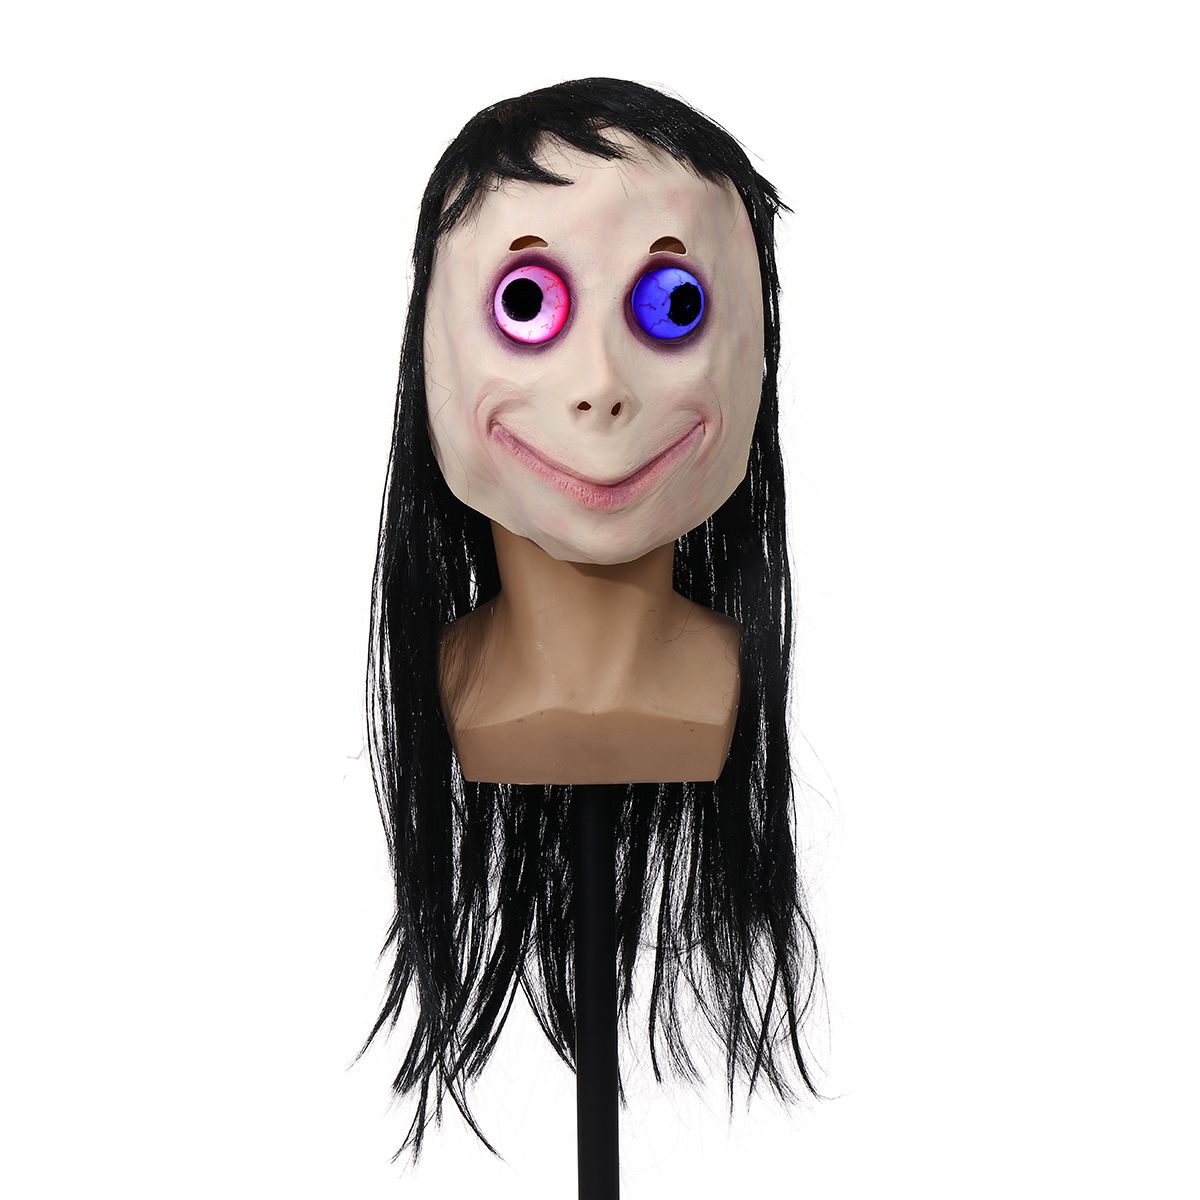 LED-Scary-Momo-Mask-Game-Horror-Mask-Cosplay-Full-Head-Momo-Mask-Big-Eye-With-Long-Wigs-Halloween-Pa-1556450